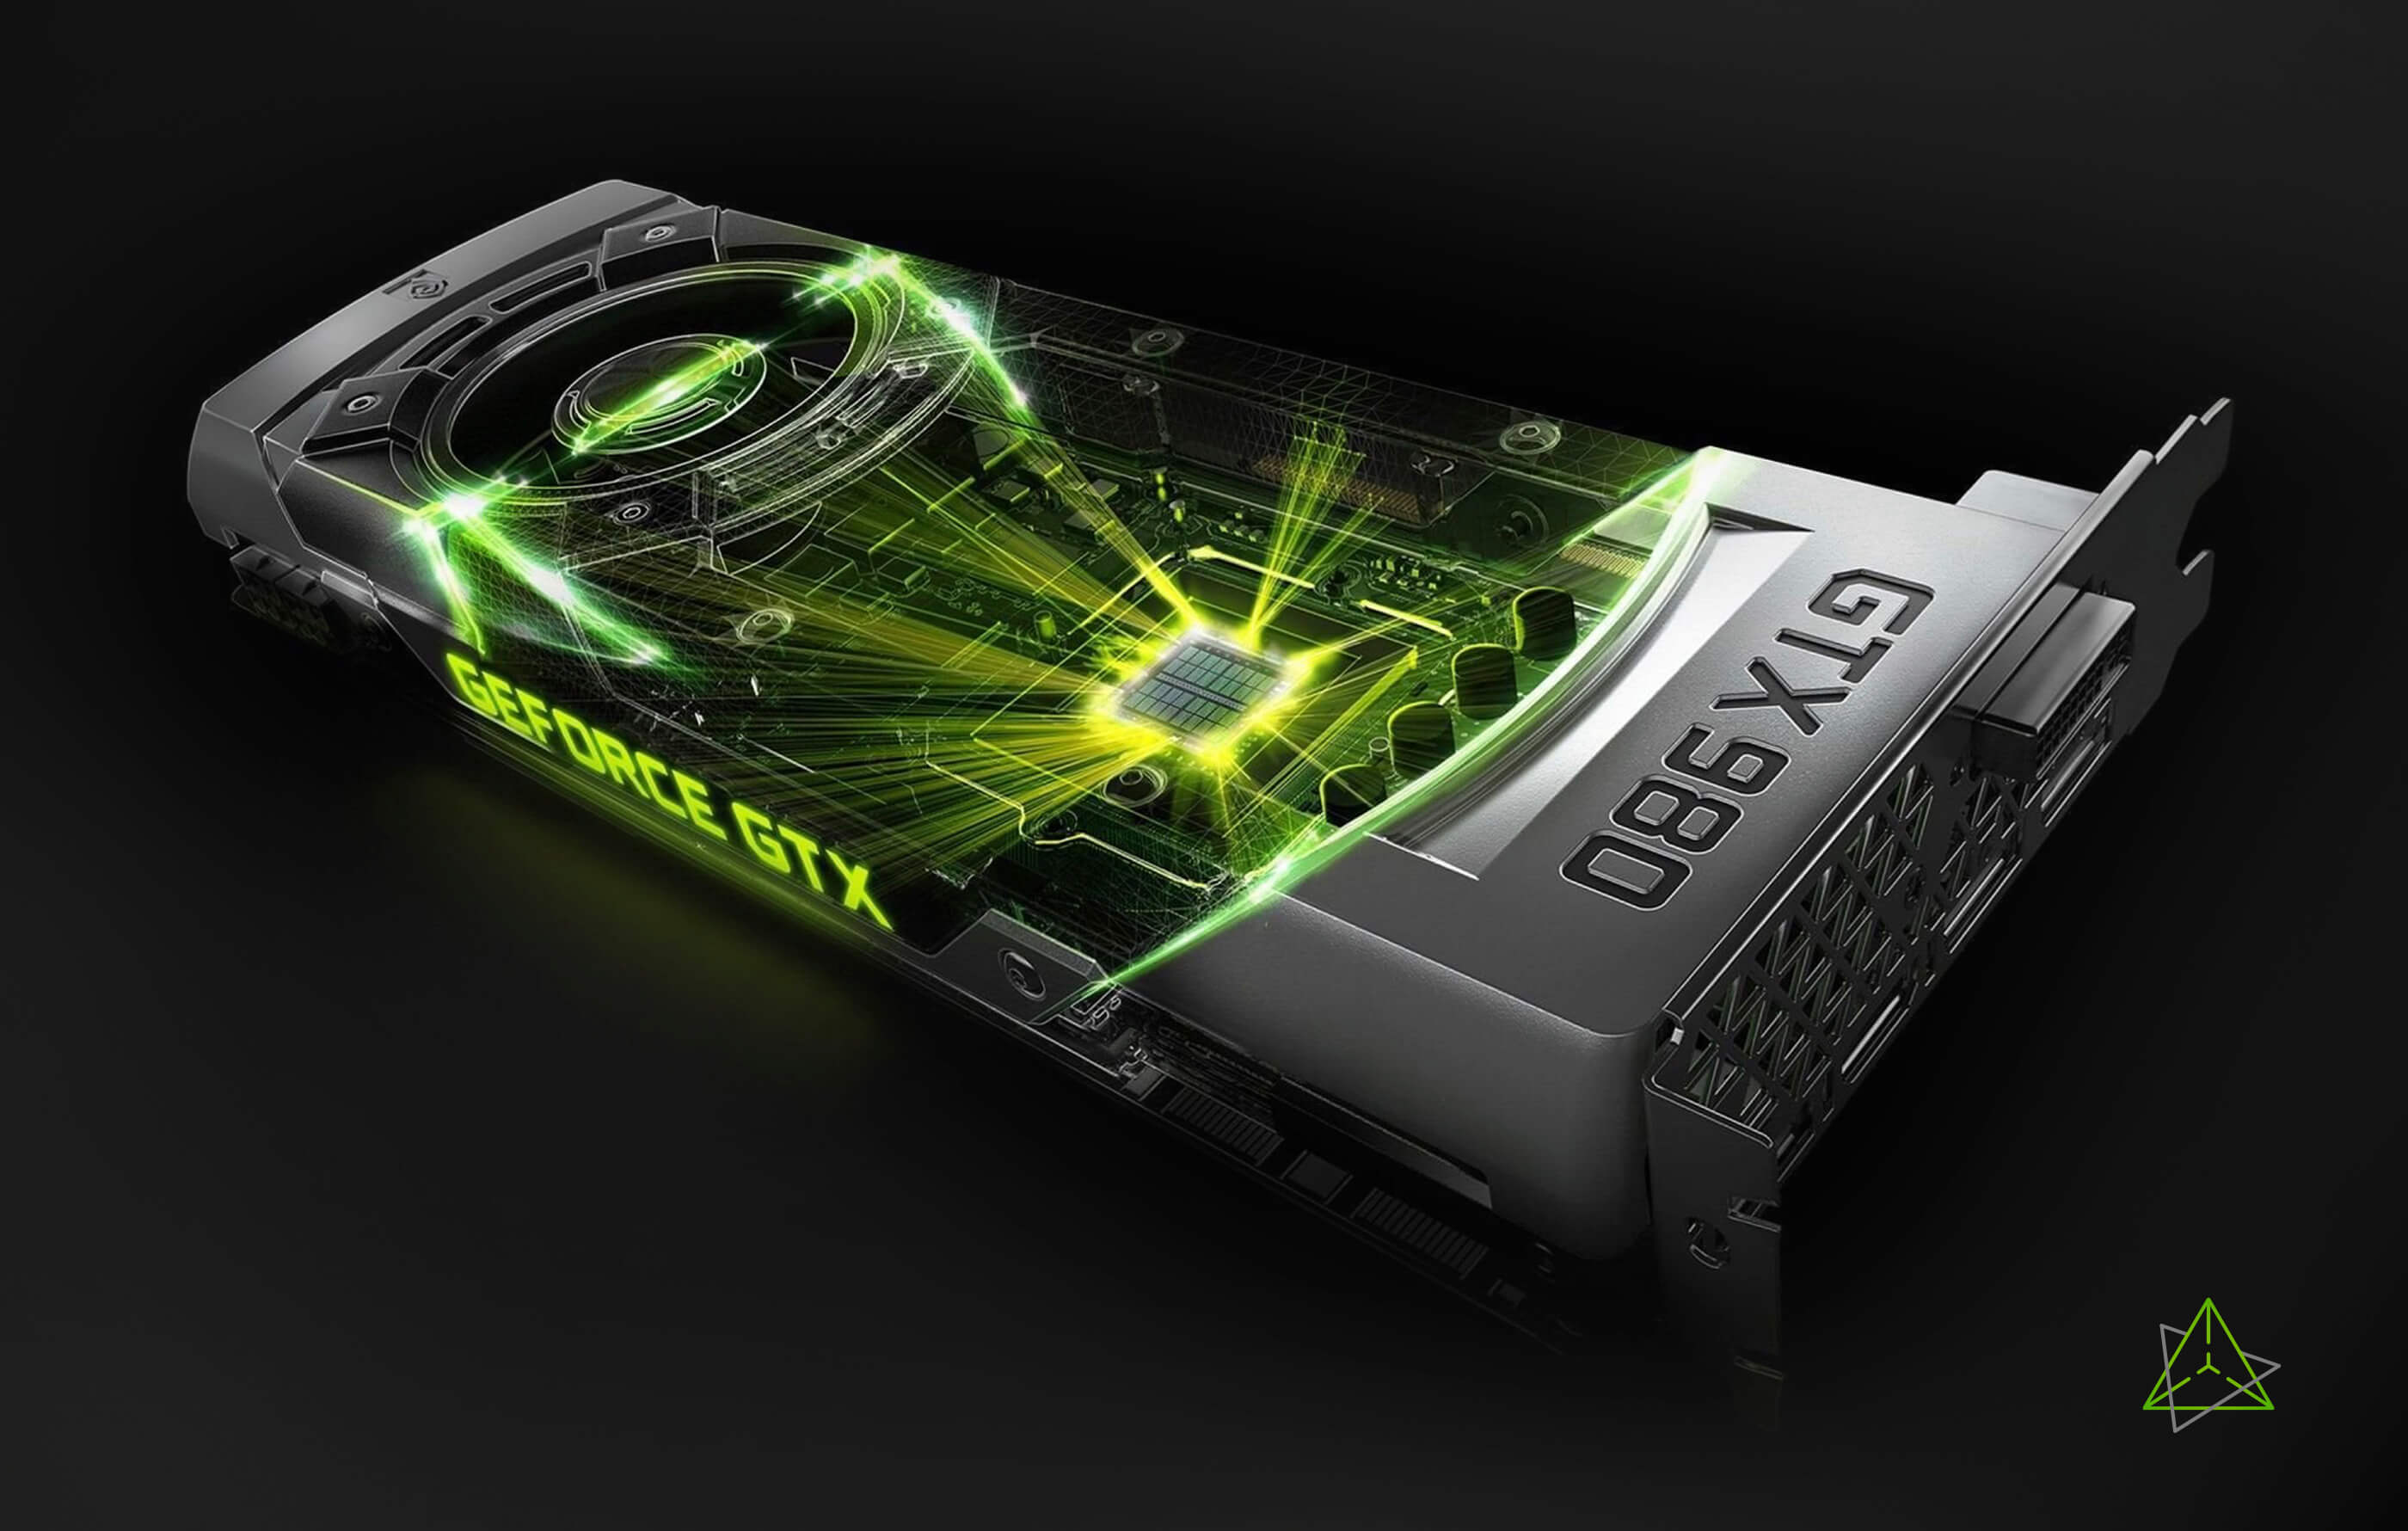 Full screen image of an Nvidia GeForce GTX 980 desktop graphics card